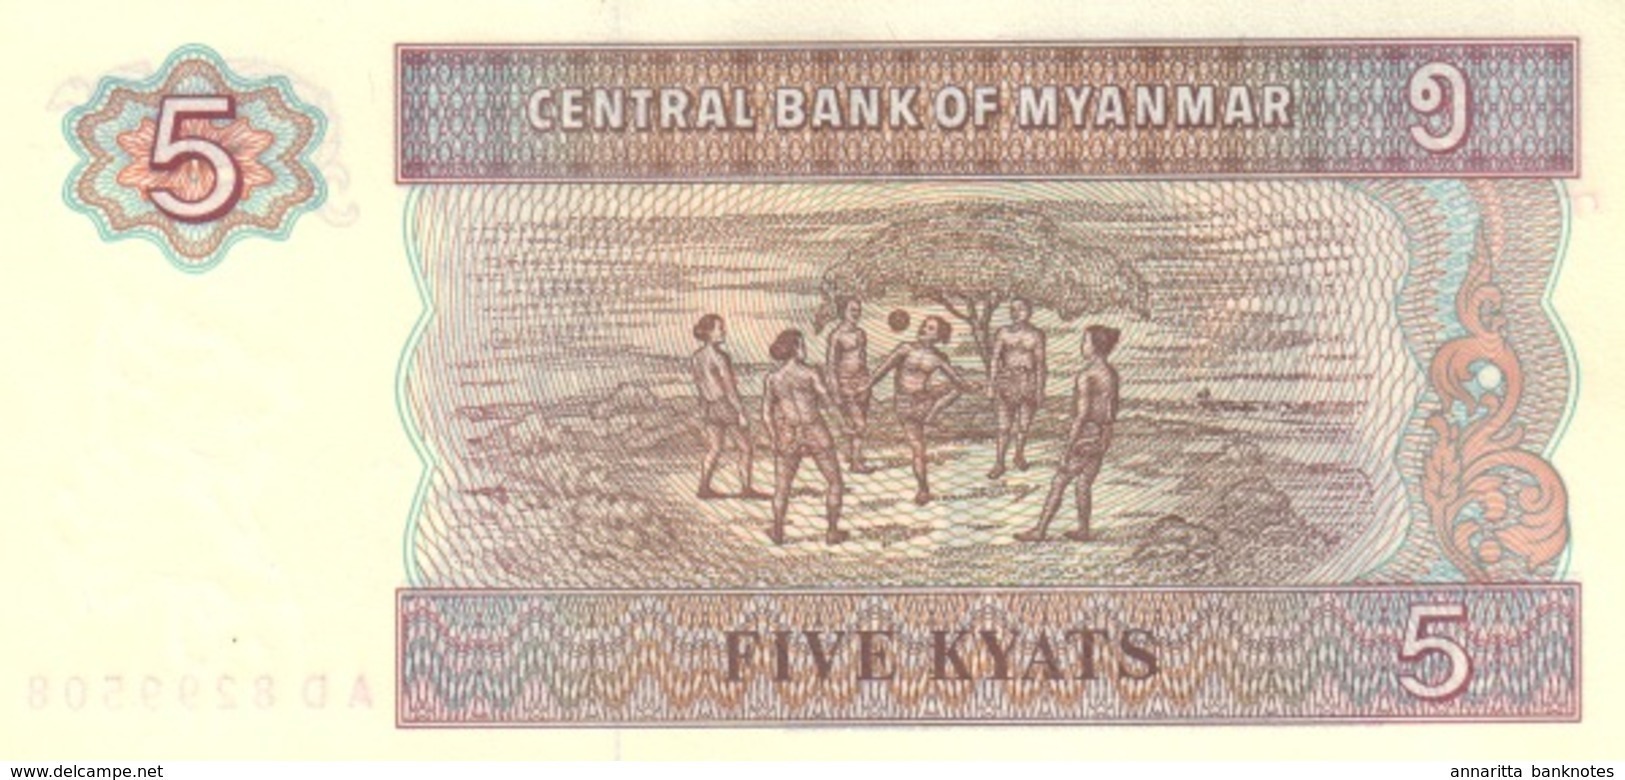 MYANMAR 5 KYATS ND (1995) P-70b UNC THICK PAPER [MM104b] - Myanmar